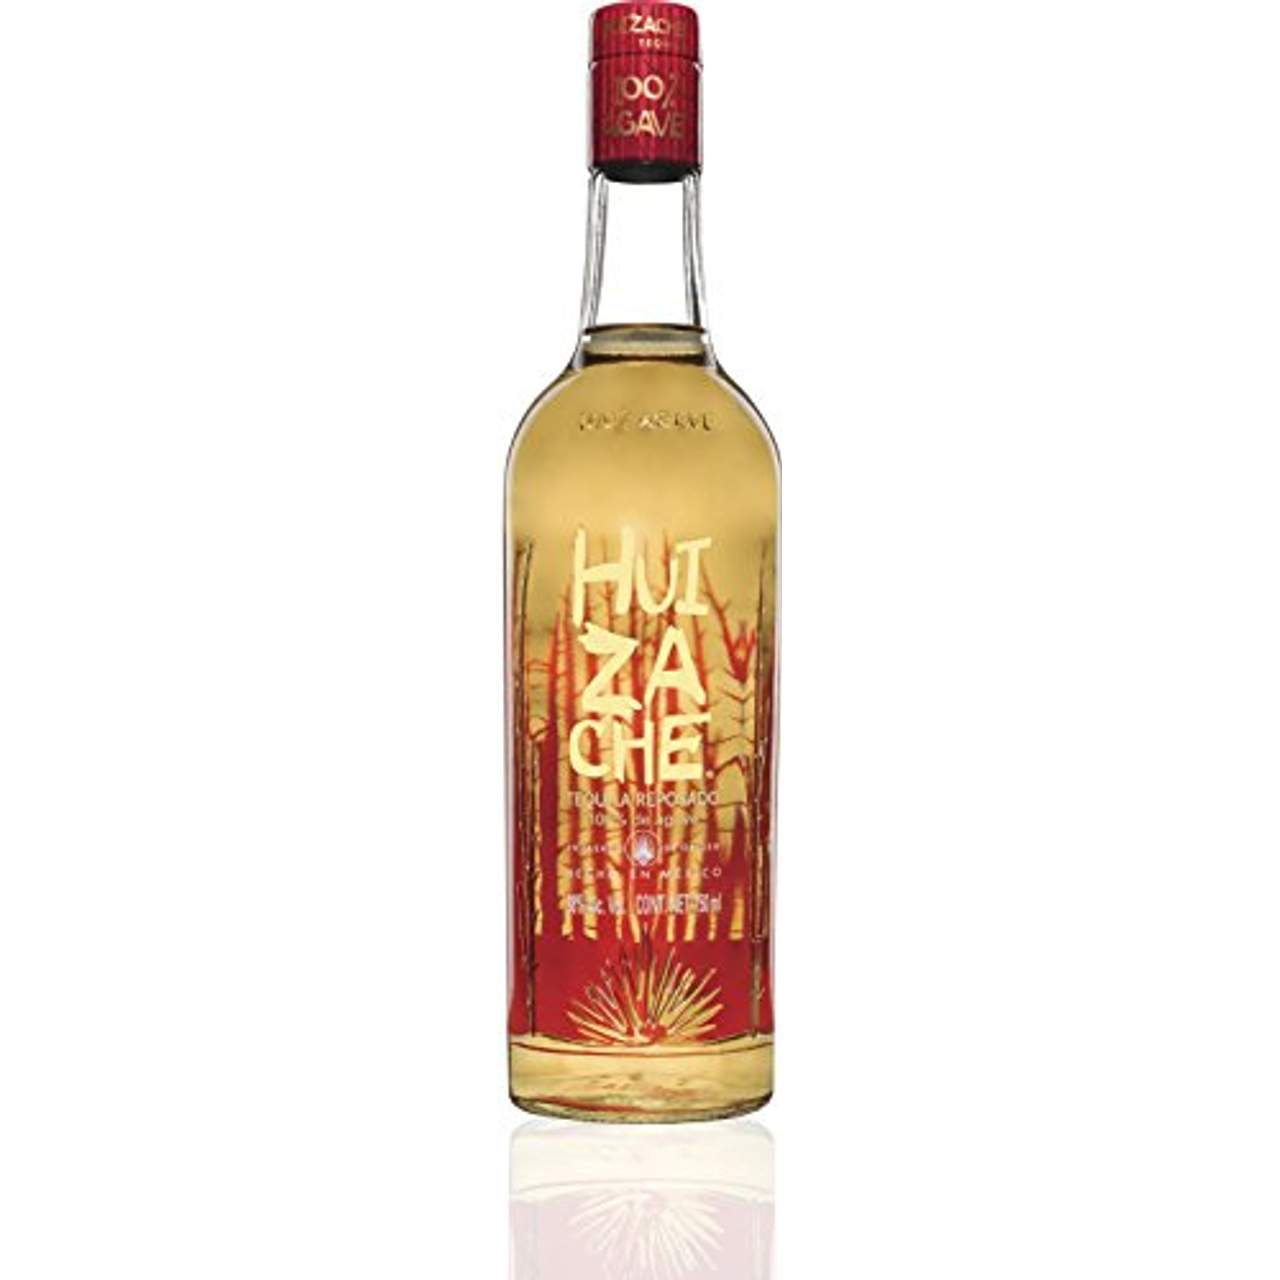 Huizache Tequila Reposado Gold Gewinner World Spirits Award 2019-100% Agave